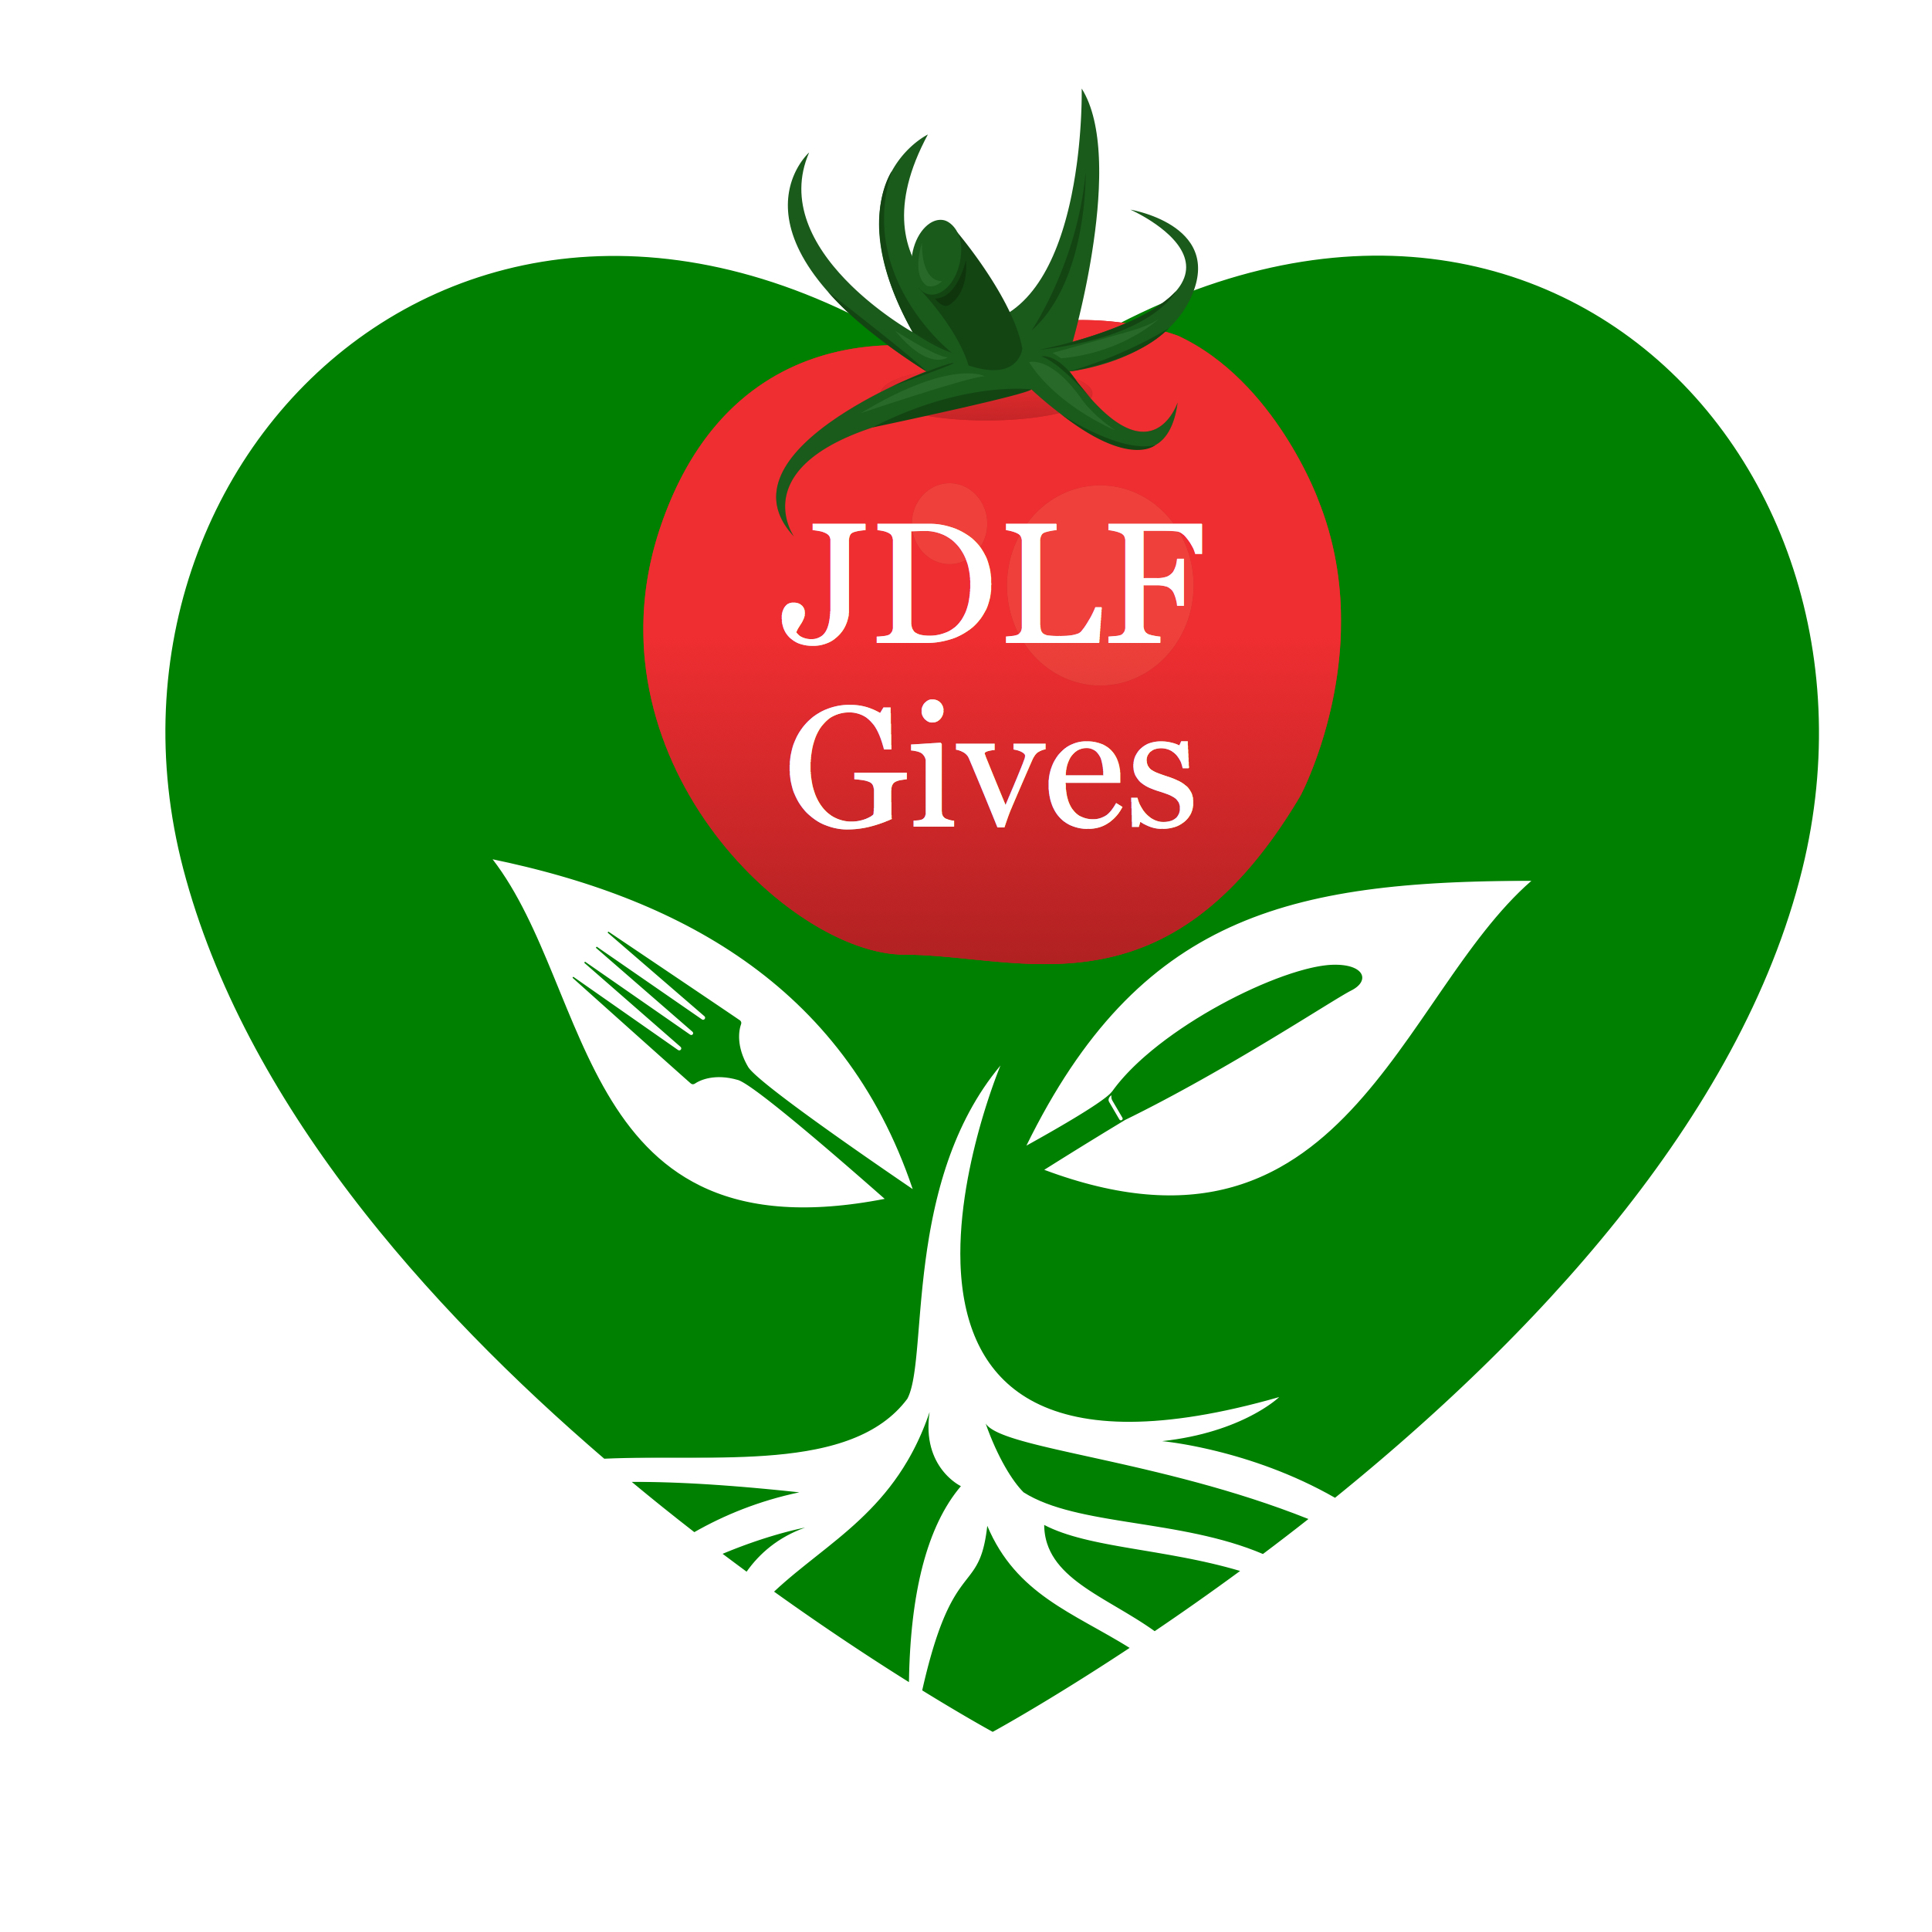 JDLF Gives